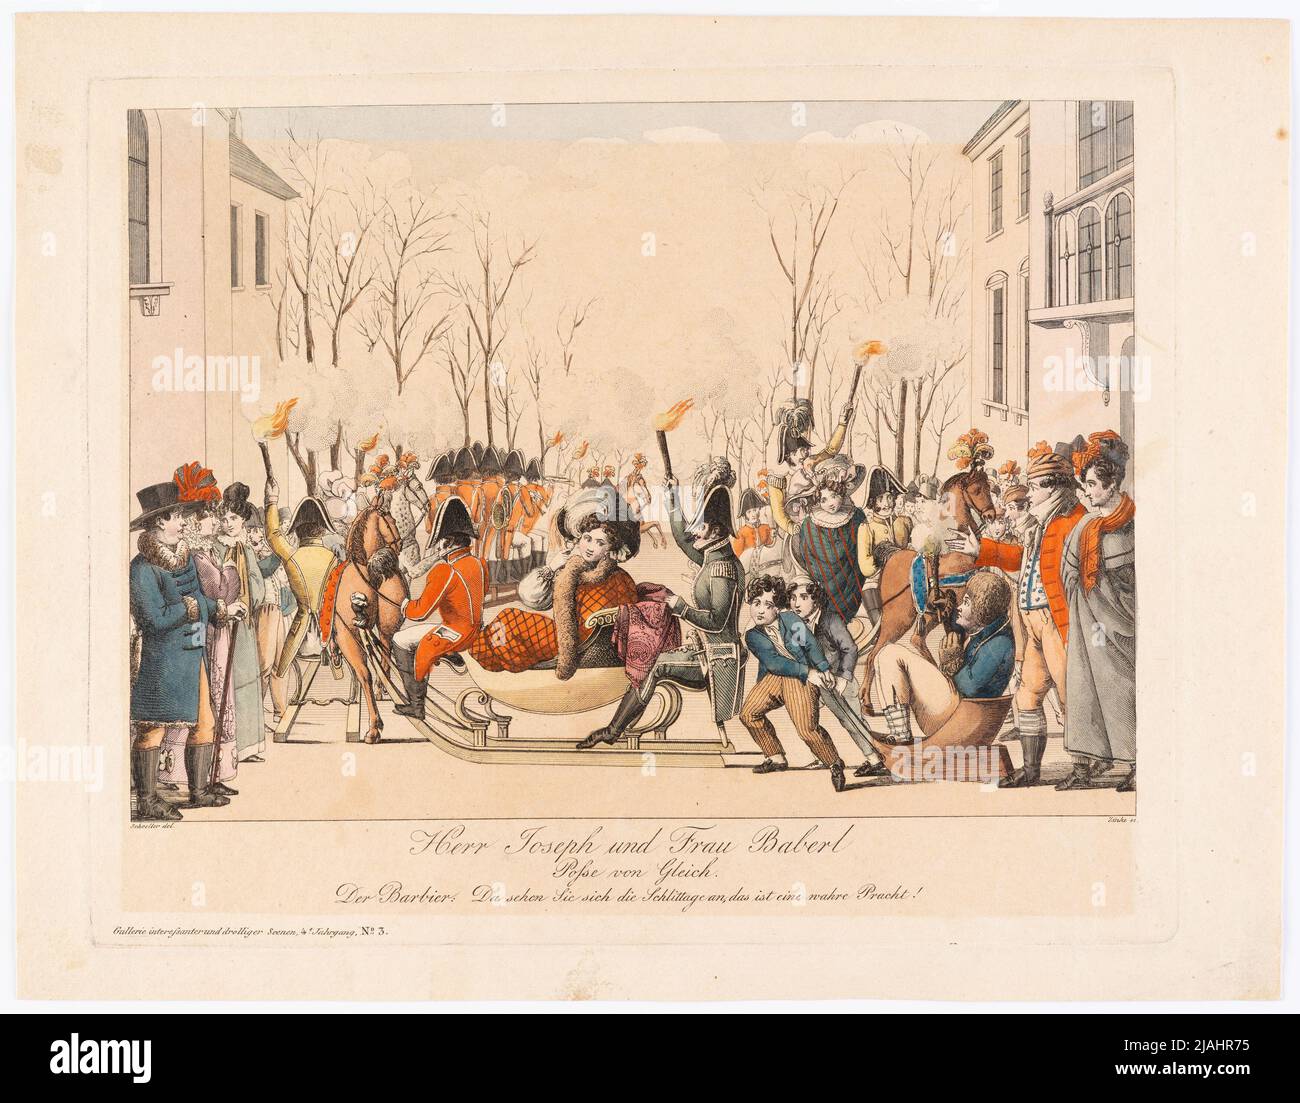 'Sr. Joseph y la Sra. Baberl', Posse von Gleich (Gallerie Drollerie Scenen para el periódico teatral, 4th año, Nº 3). Johann Wenzel Zinke (1782-1851), grabador de cobre, después de: Johann Christian Schoeller (1782-1851), artista Foto de stock